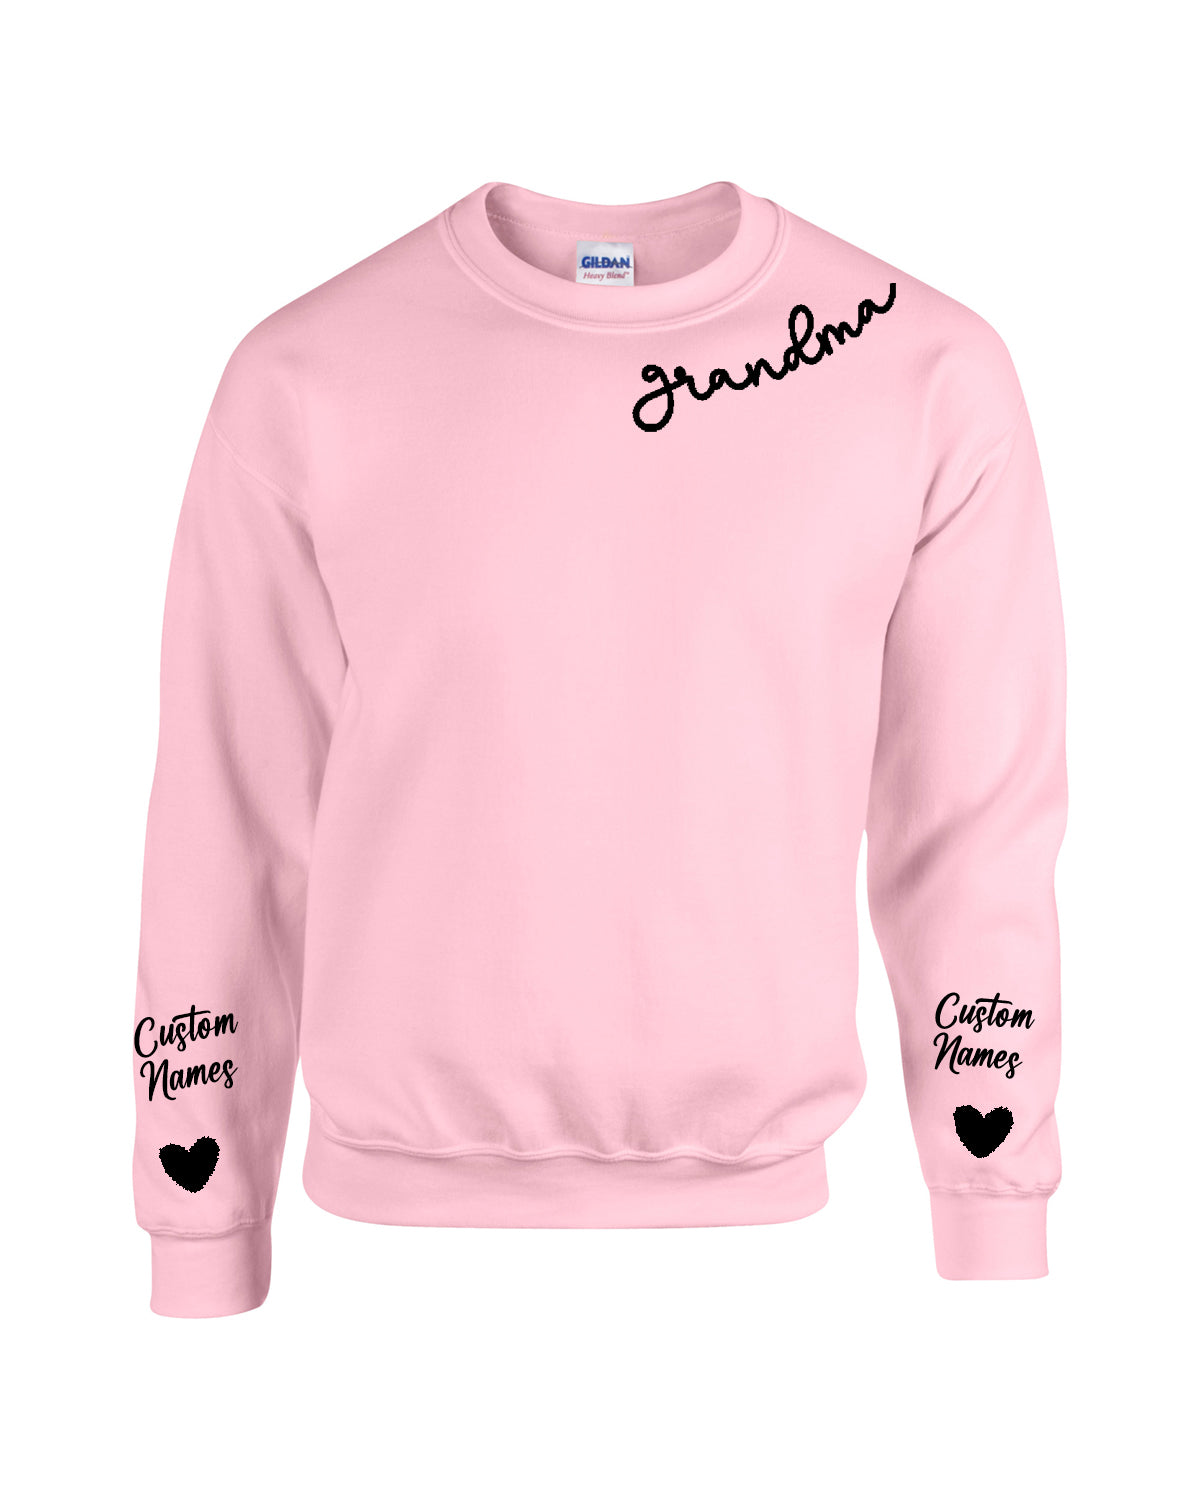 grandma custom sweatshirt with grandkids names 